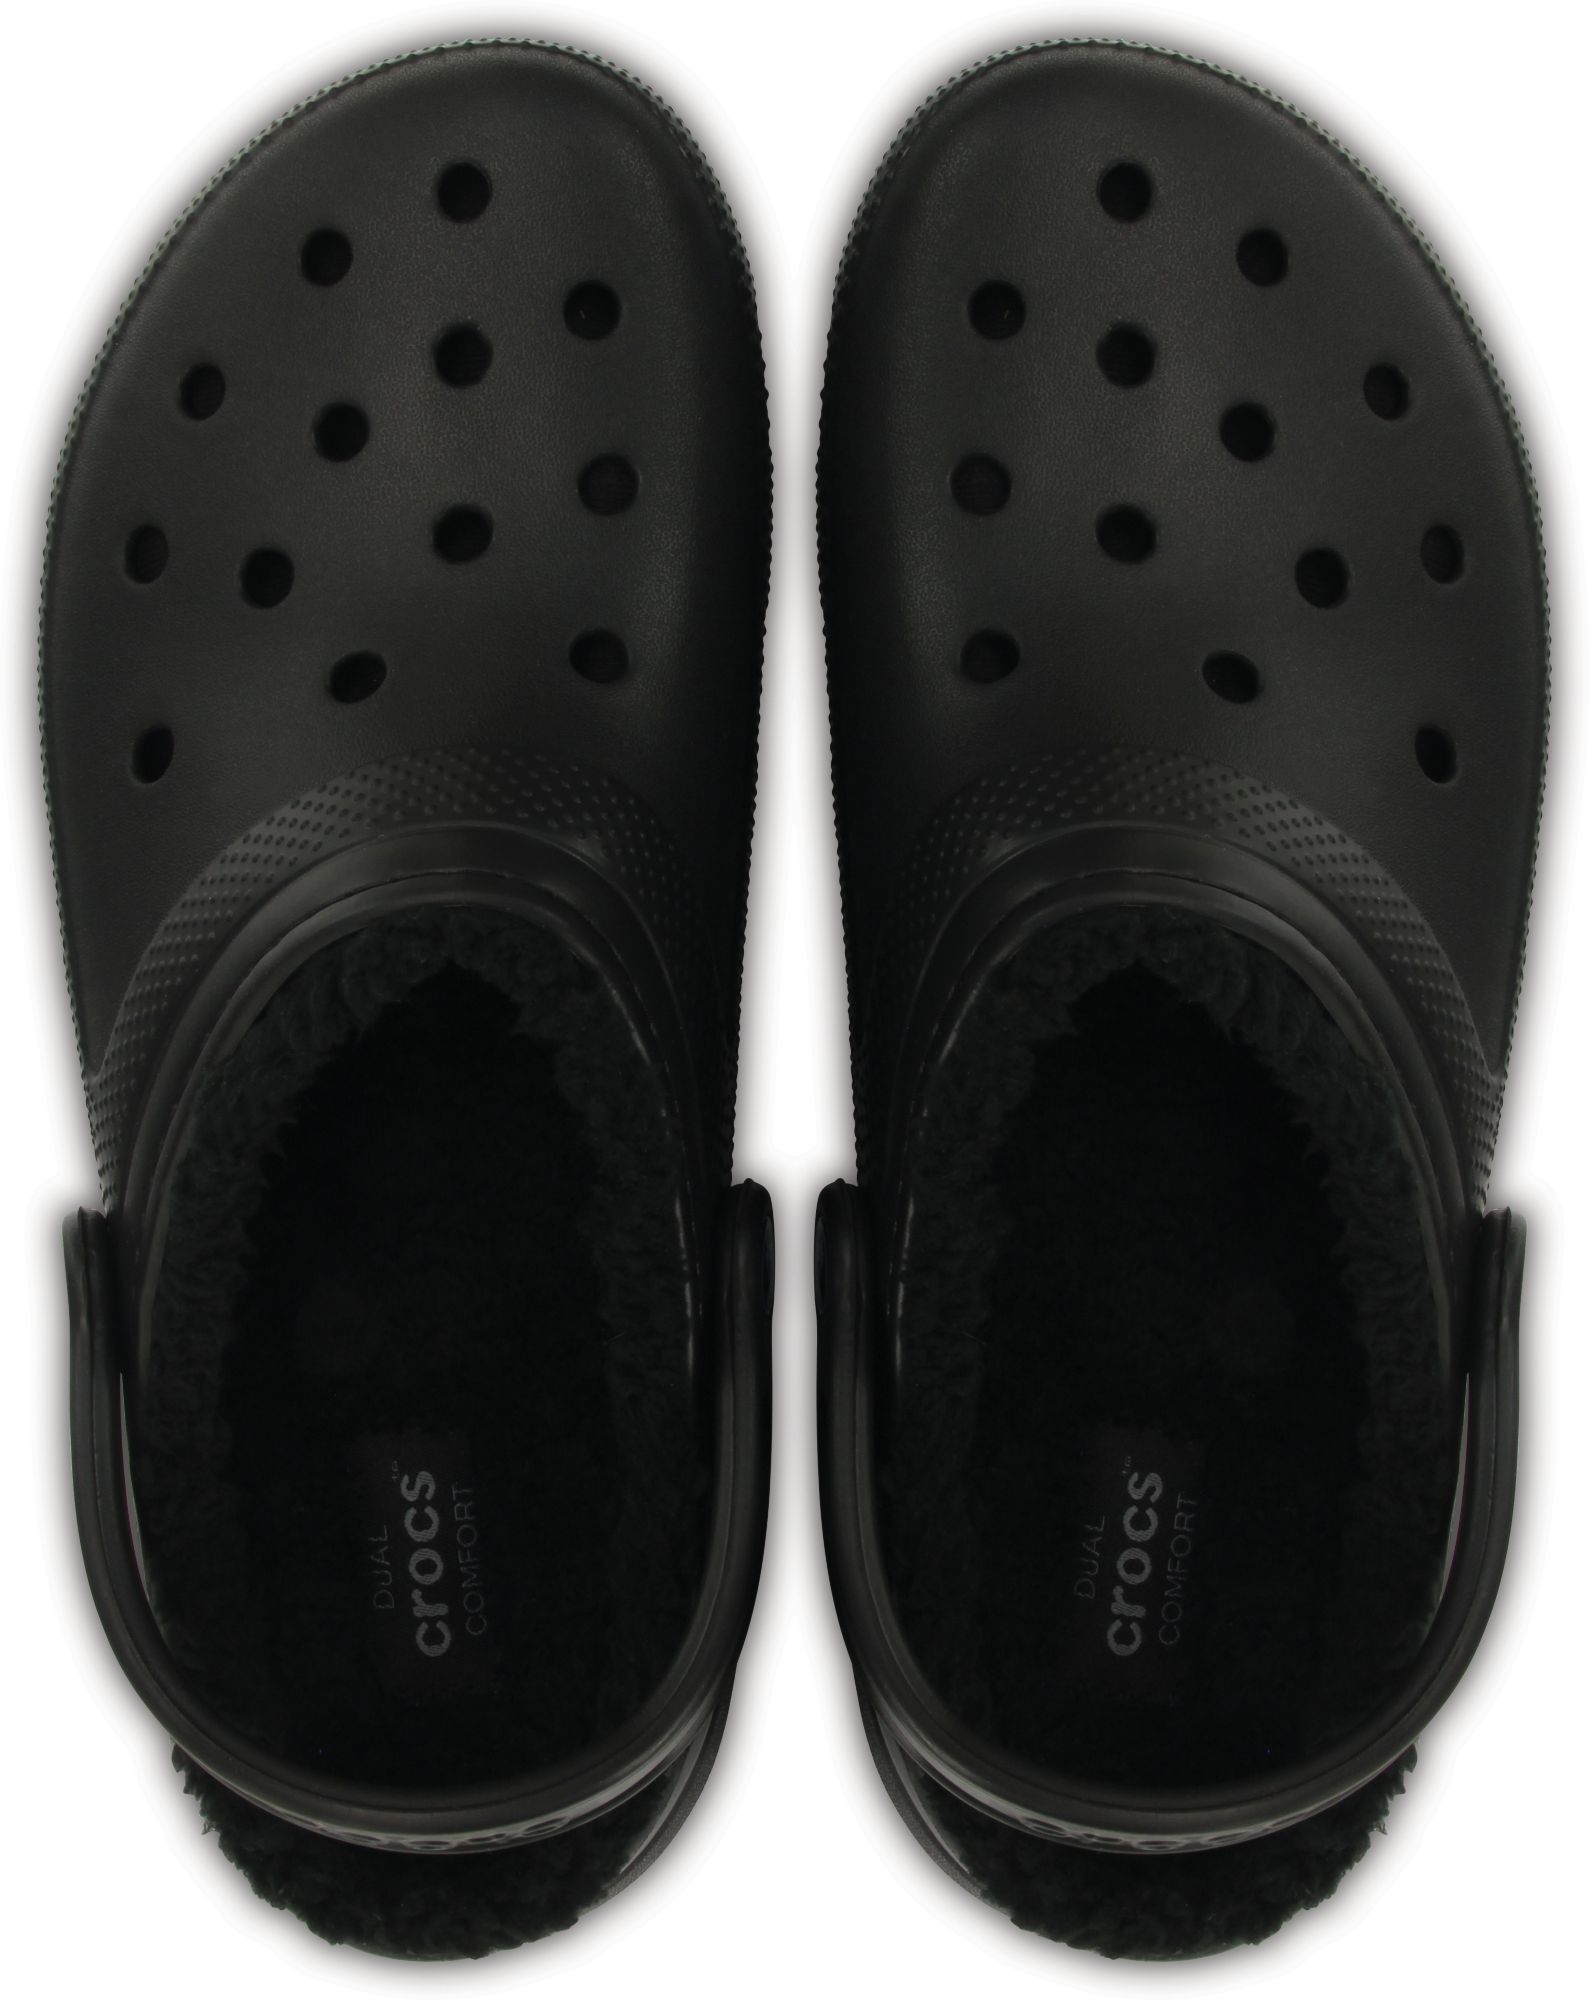 black insulated crocs